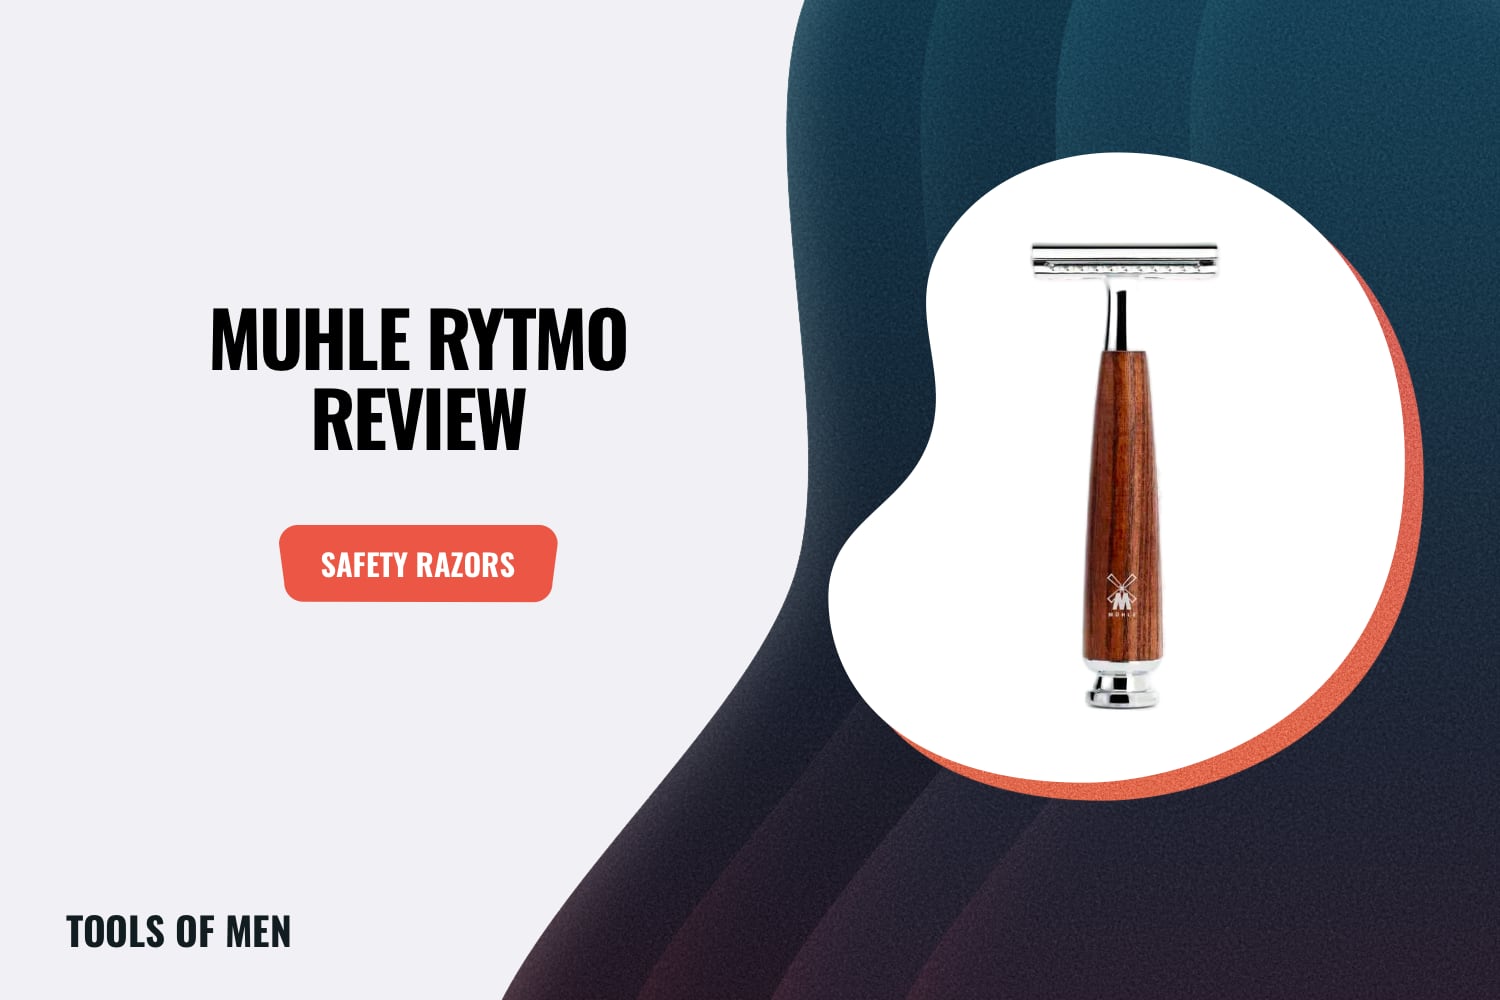 Muhle Rytmo Review feature image